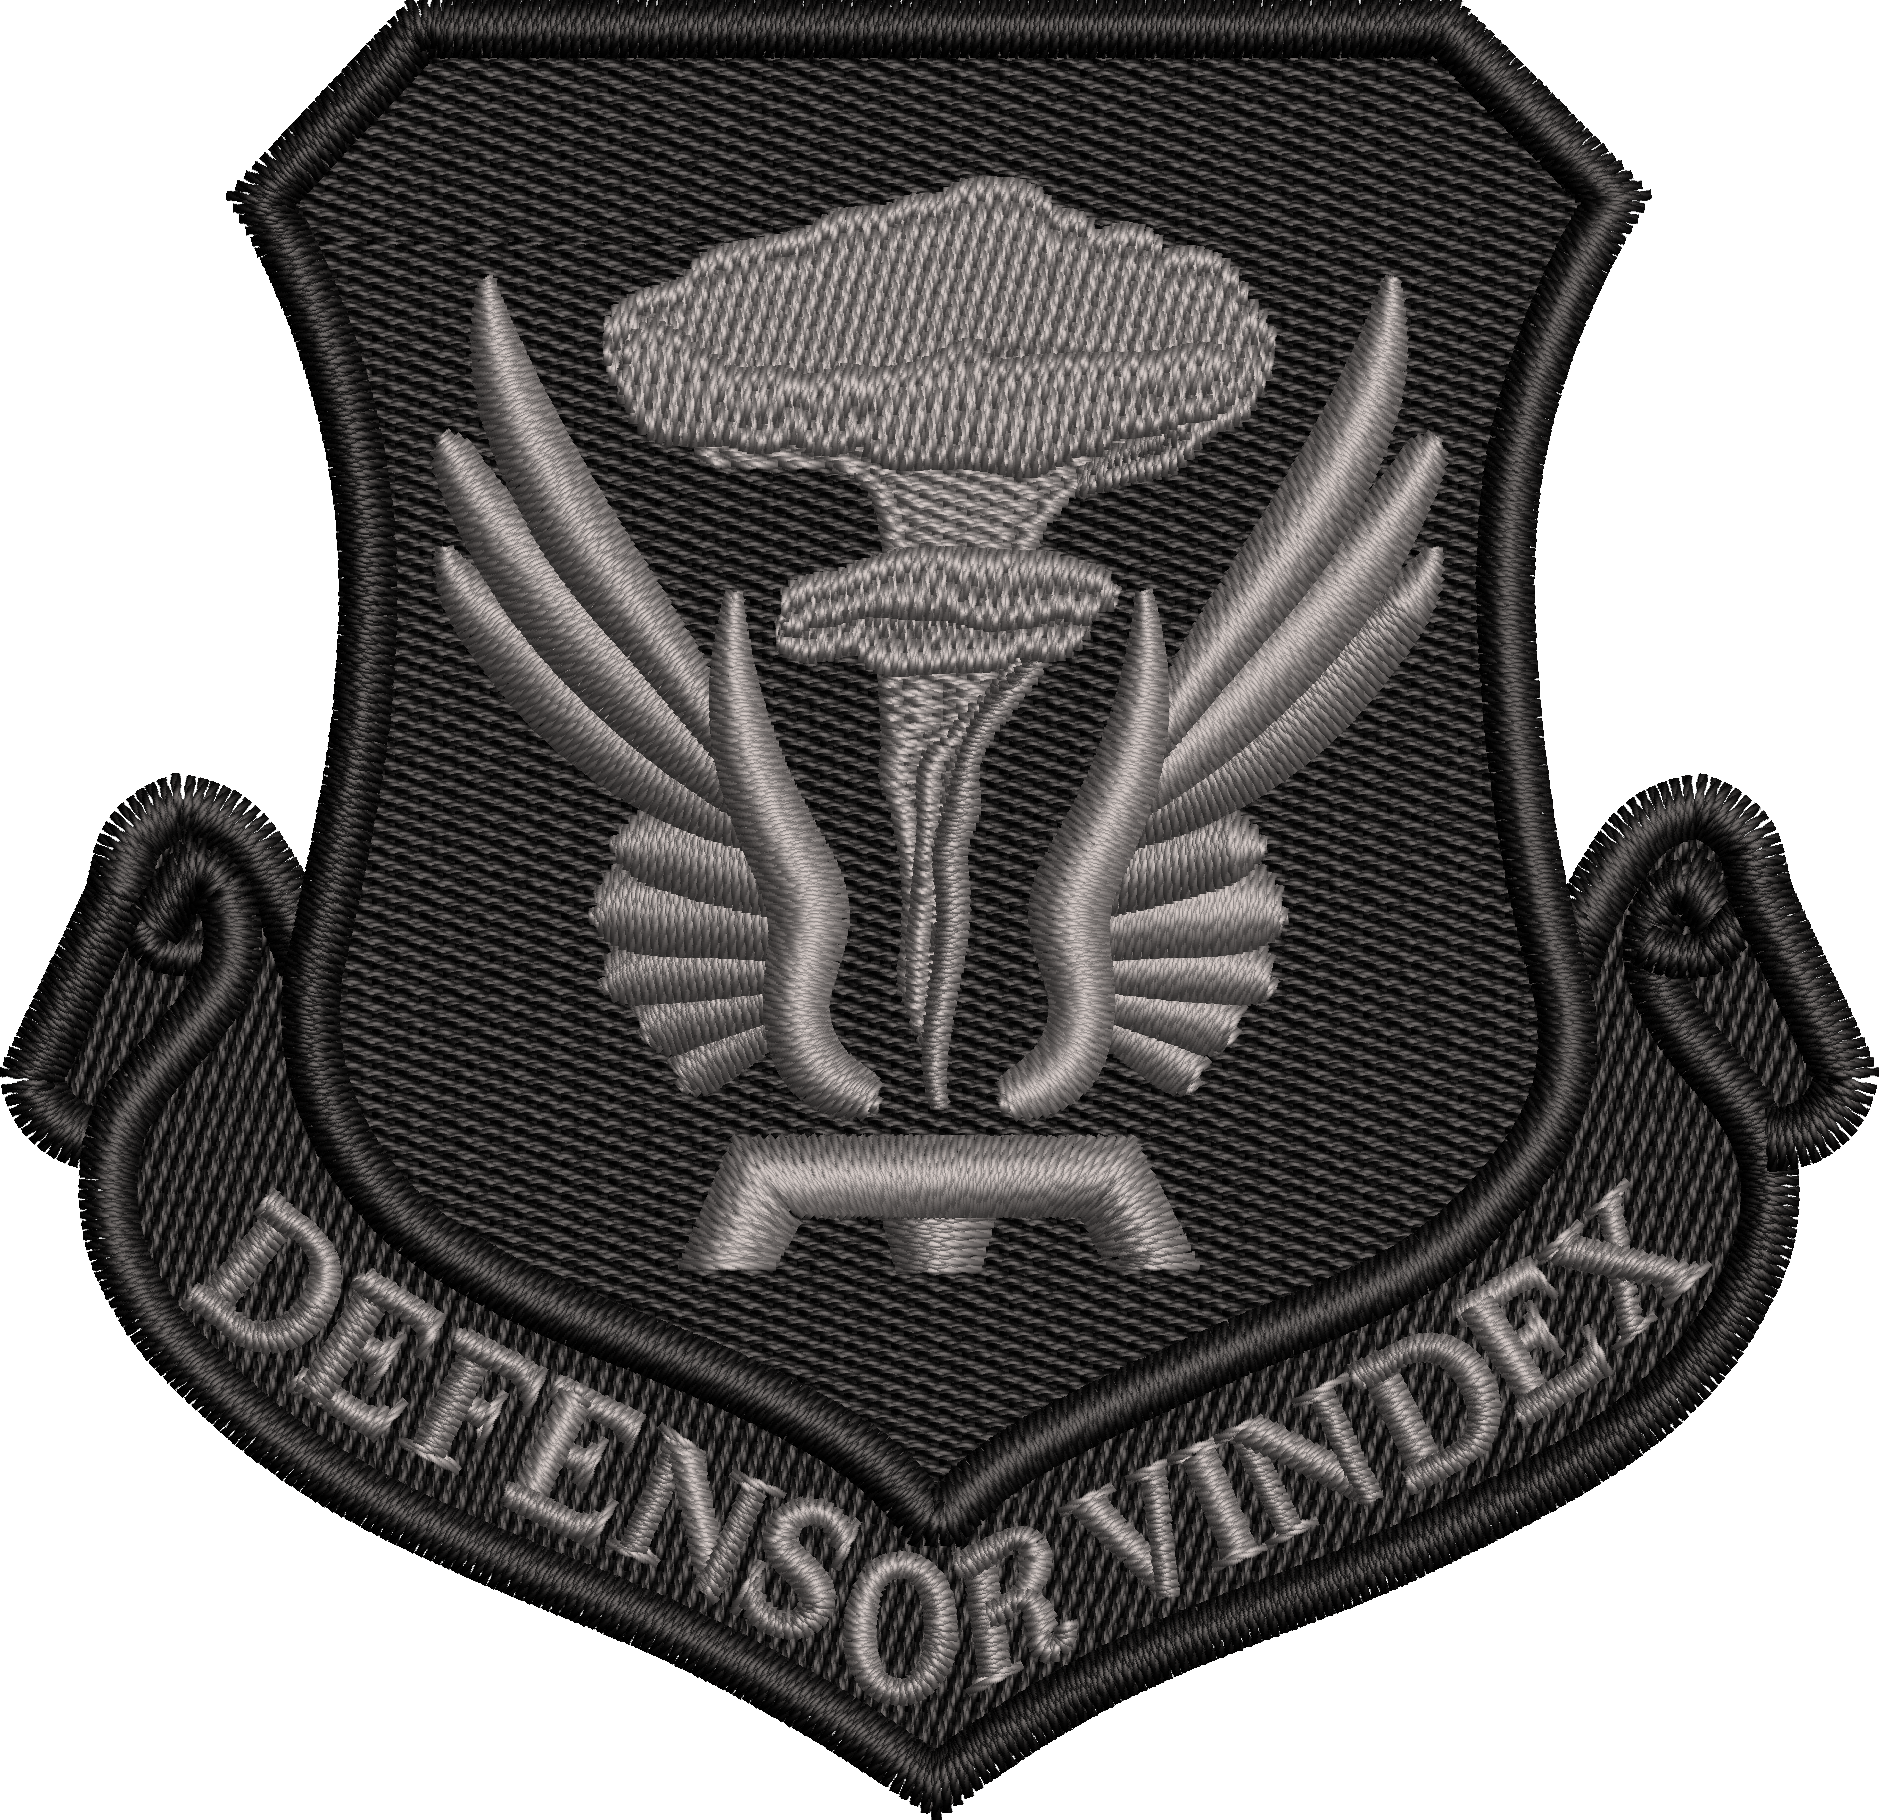 509th Bombardment Wing (DEFENSOR VINDEX) - Blackout